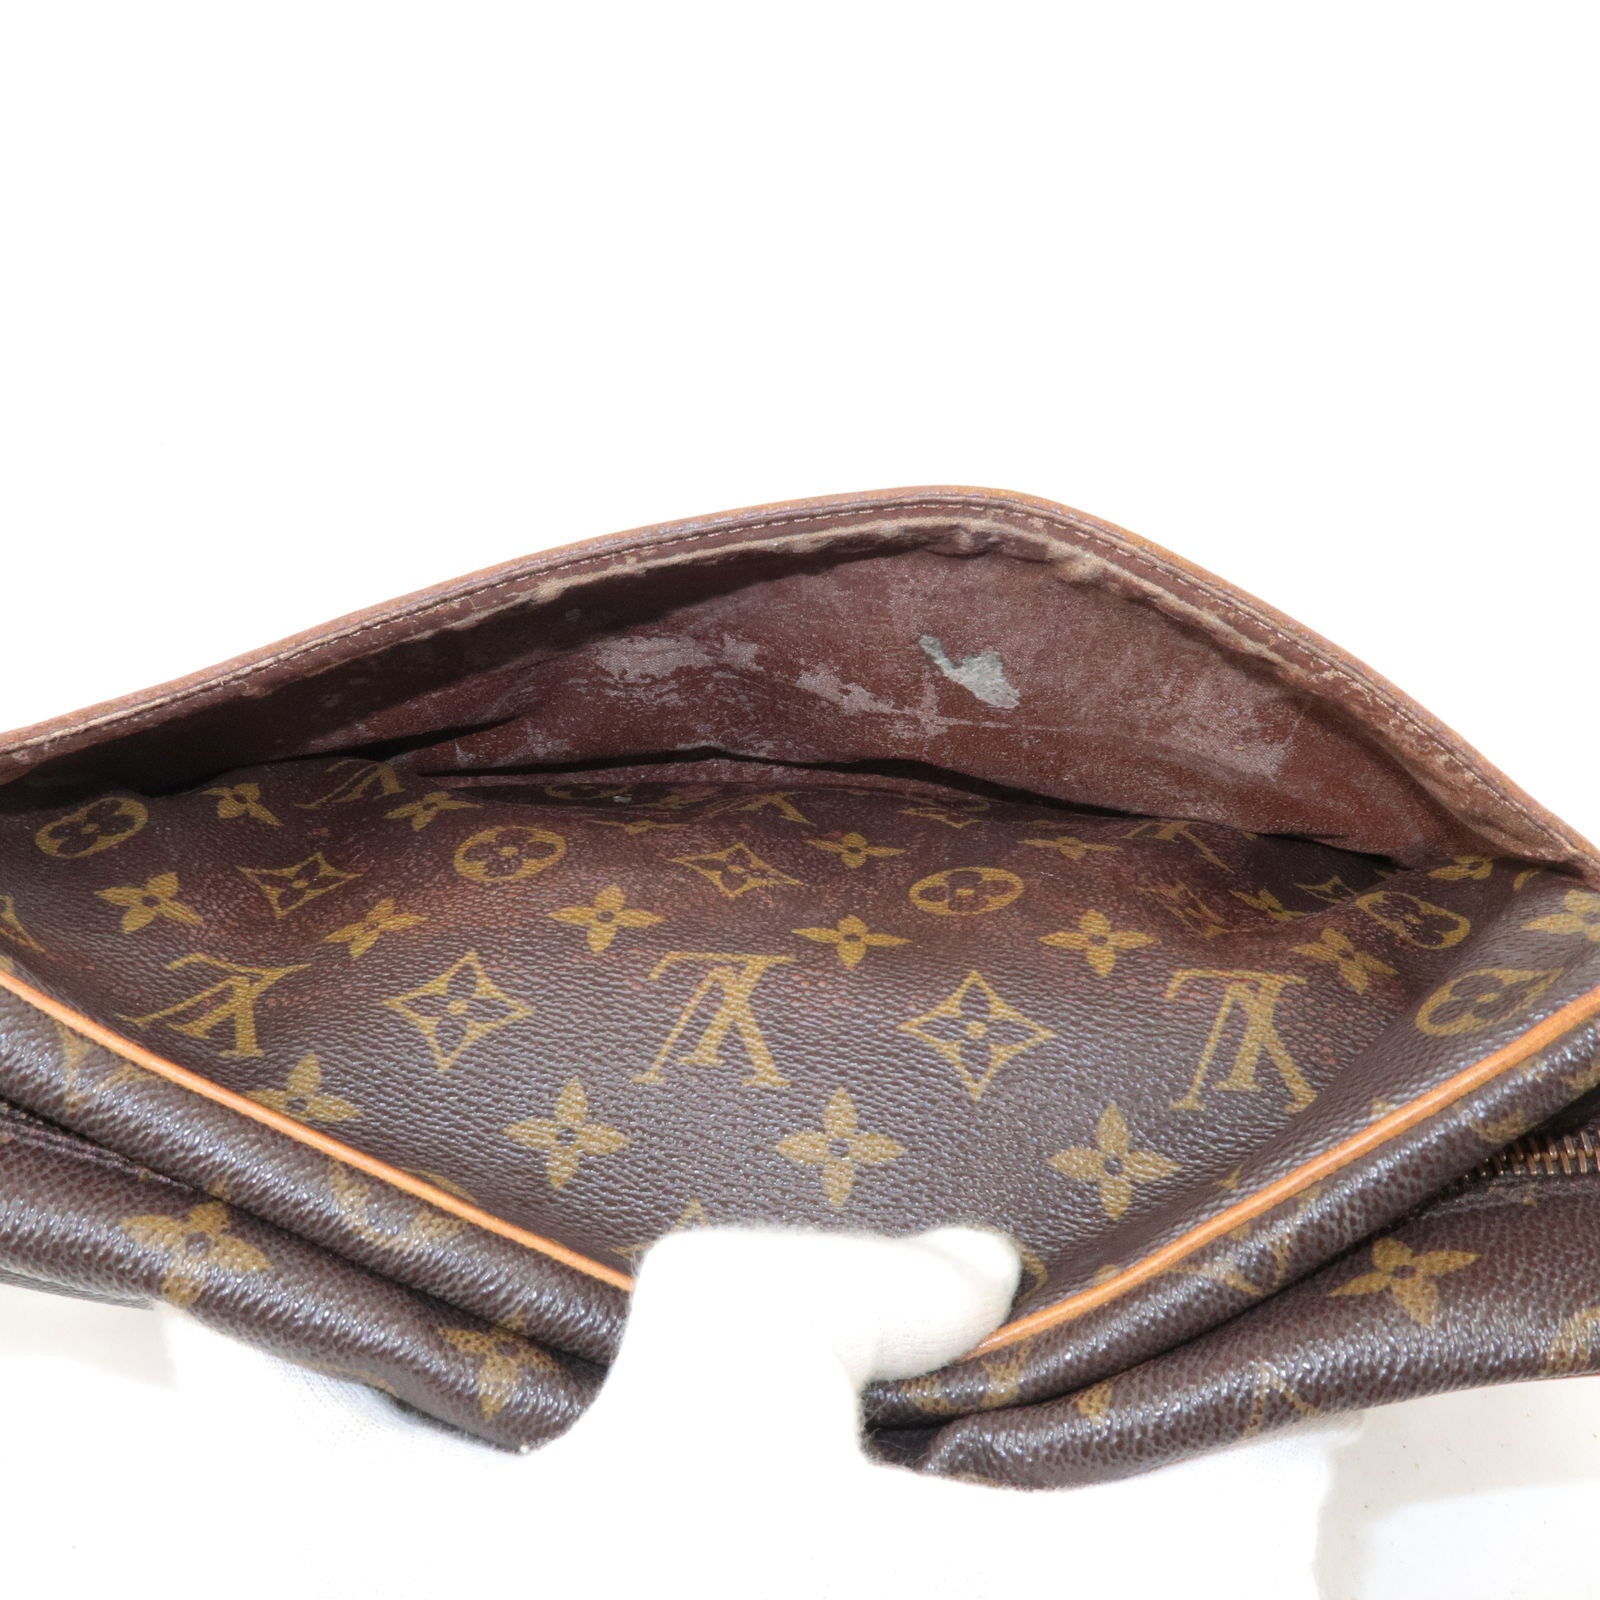 Louis Vuitton briefcase in monogram canvas and natural leather - Bag -  Shoulder - Louis - Trocadero - M51272 – Michael Burke for Louis Vuitton -  Monogram - 30 - Vuitton